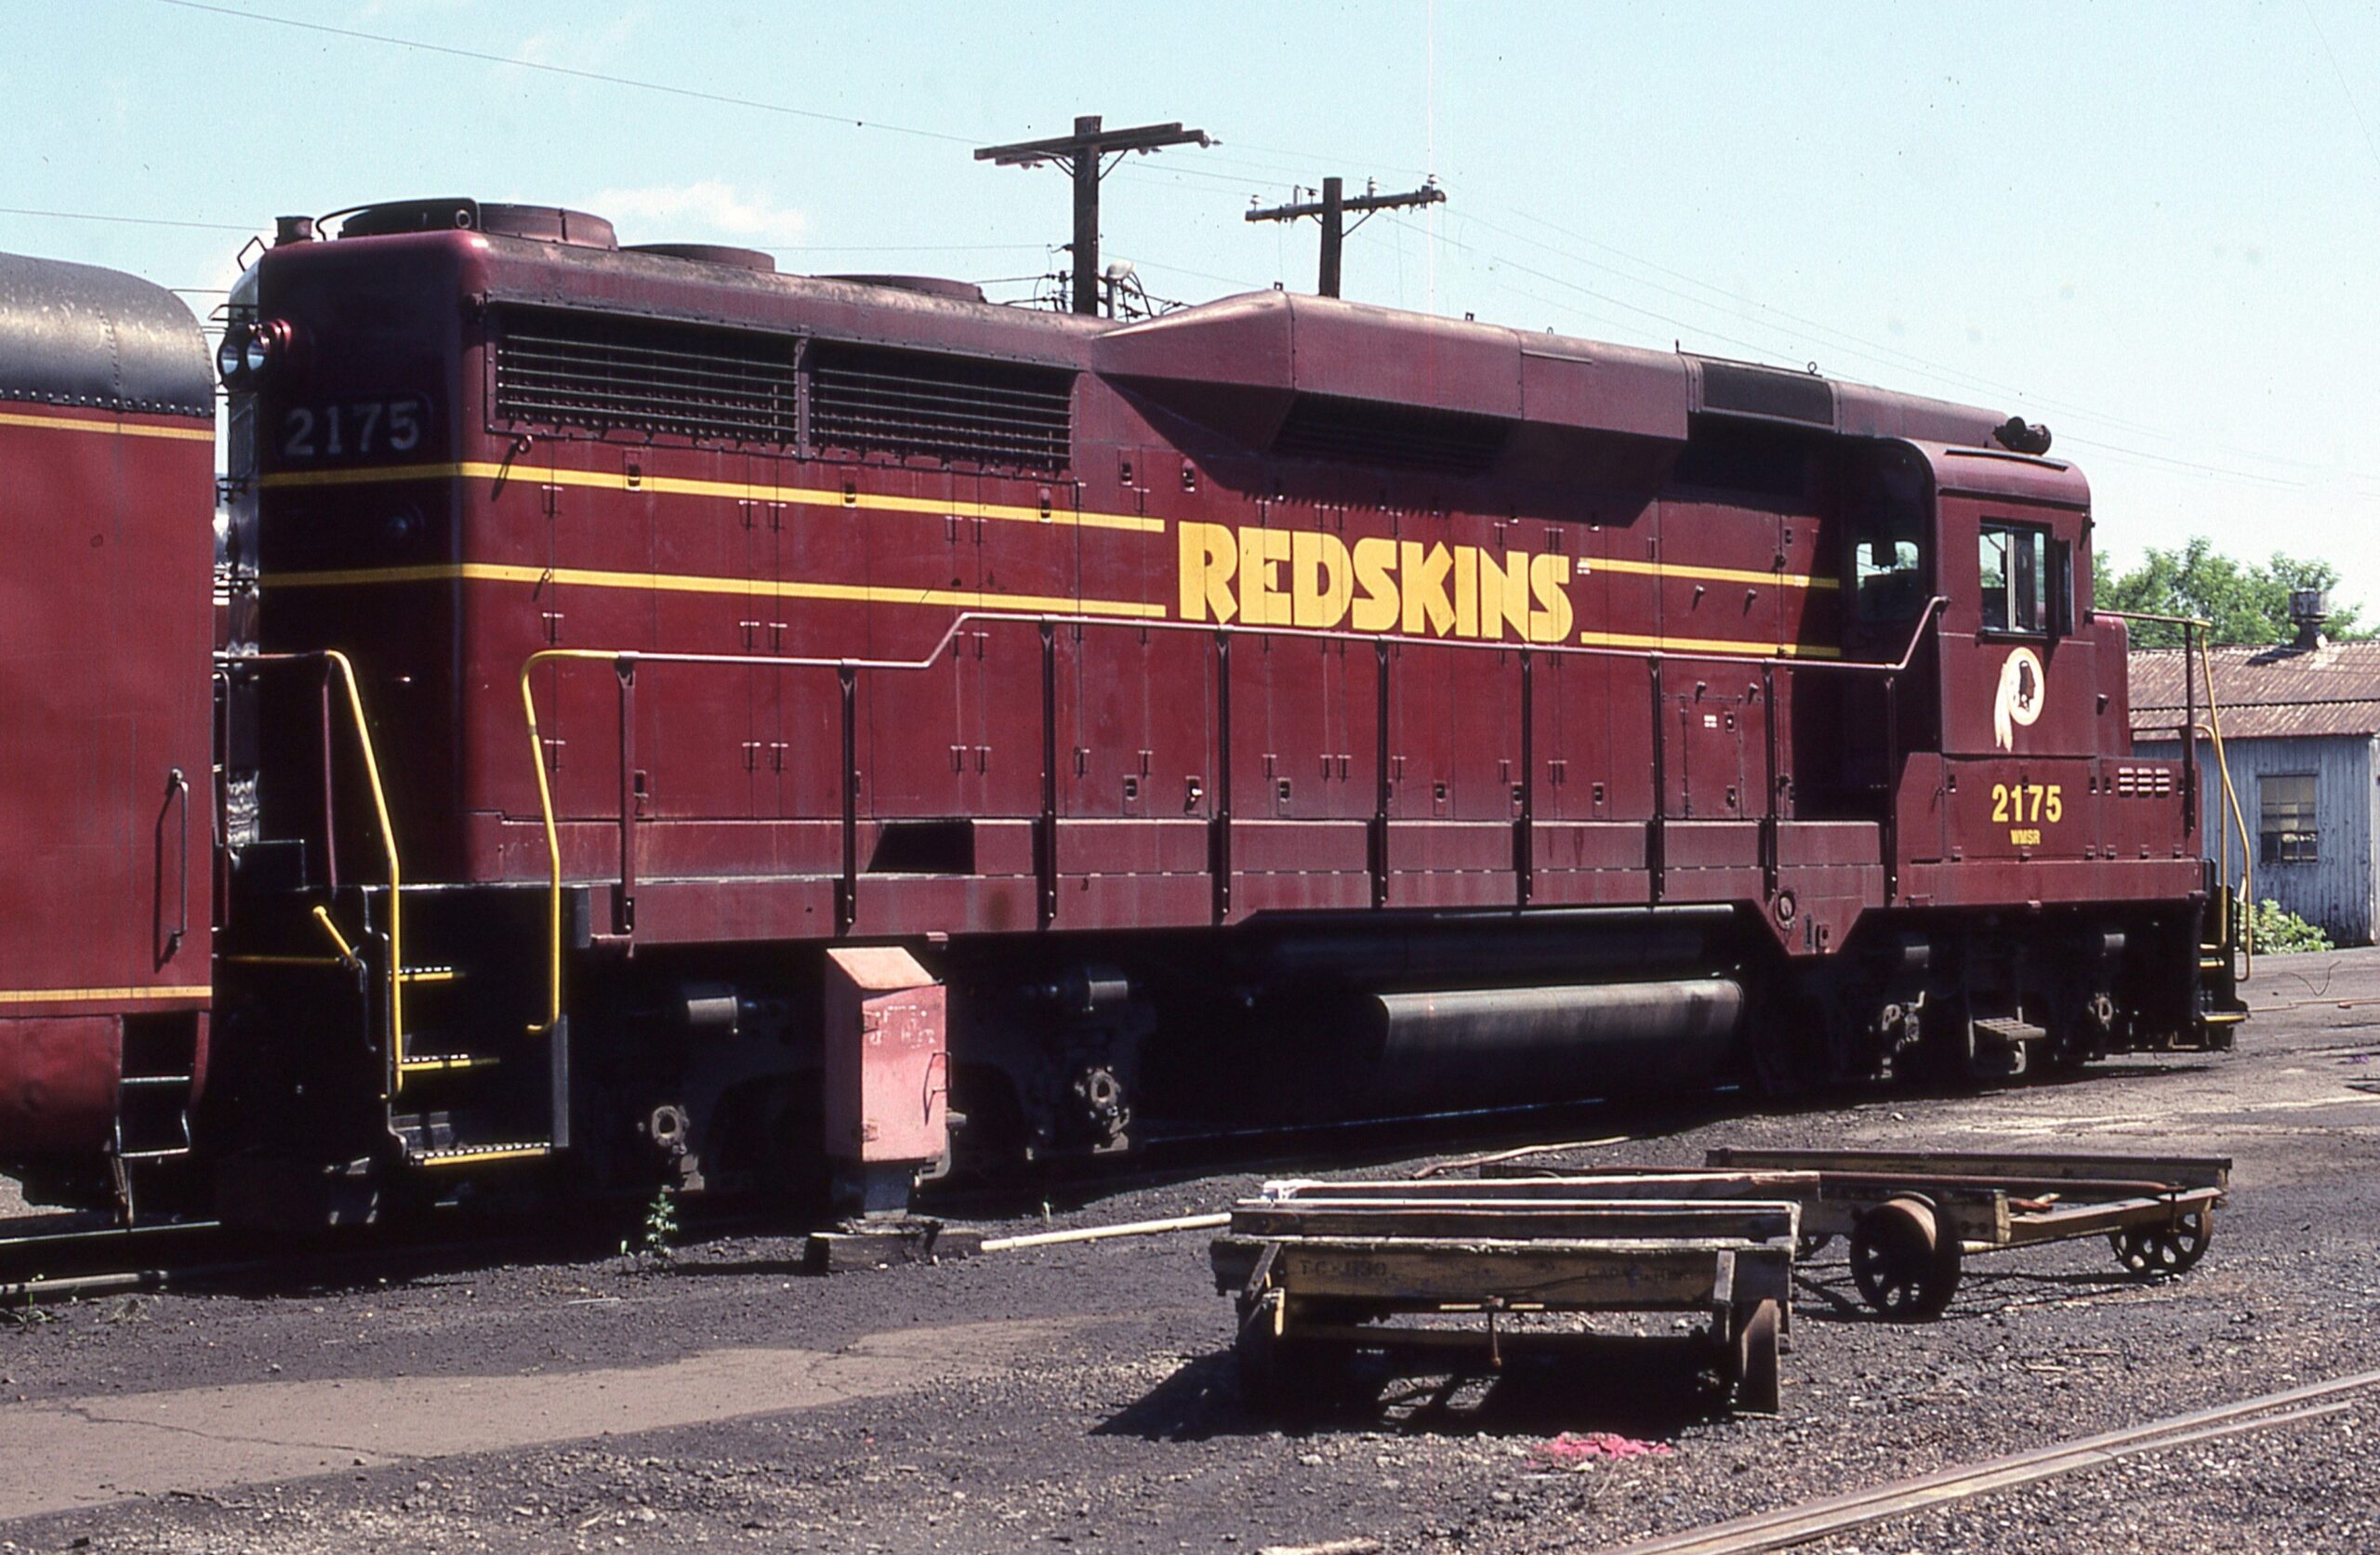 Western Maryland Scenic Railroad | Cumberland, Maryland | EMD GP30 #2175 “Washington Redskins” painted diesel-electric locomotive | June 3, 1998 | Dick Flock photograph